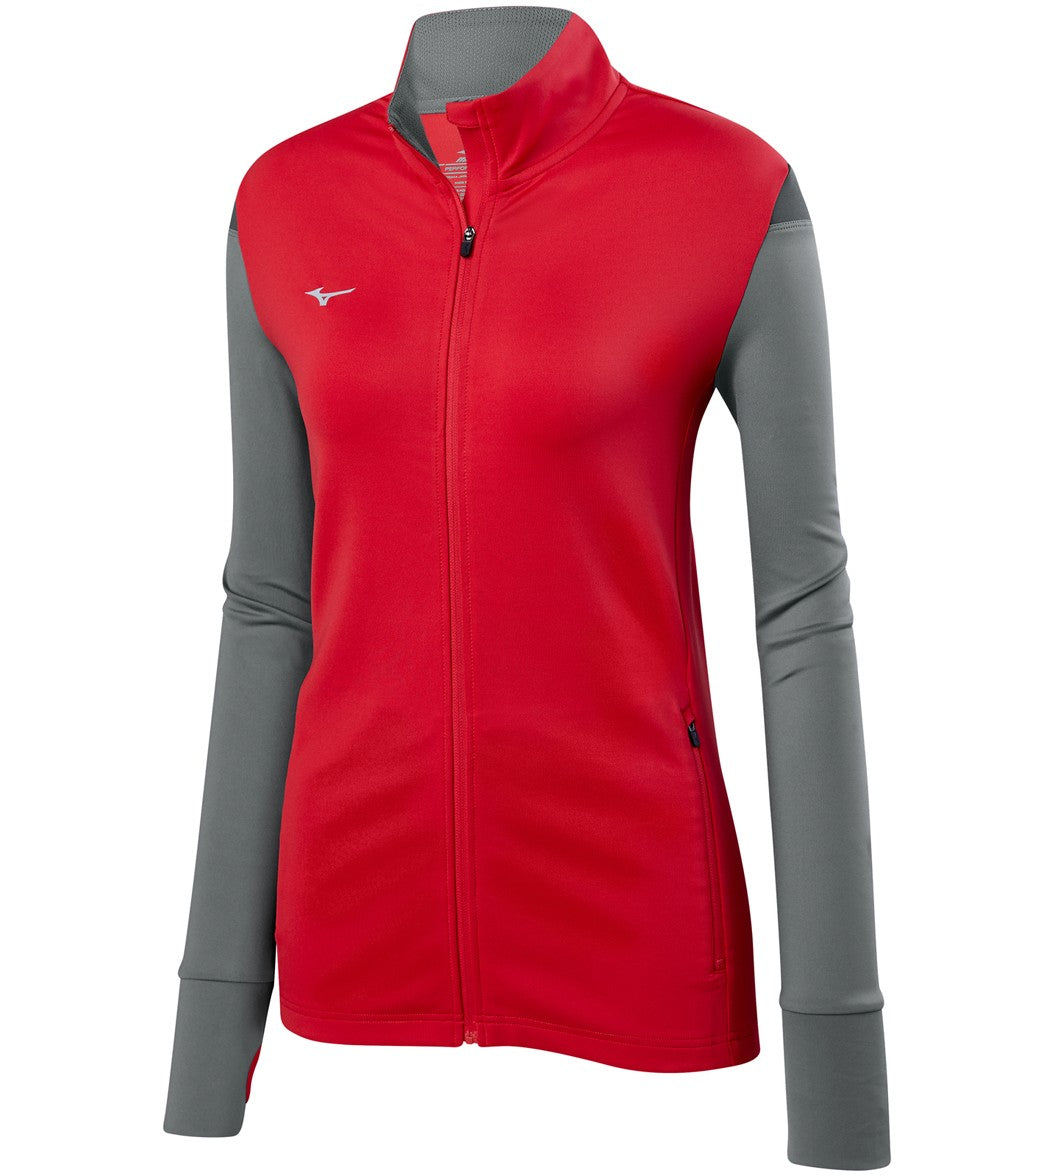 Mizuno Women's Horizon Full Zip Volleyball Jacket - Red/Grey/Charcoal Large - Swimoutlet.com